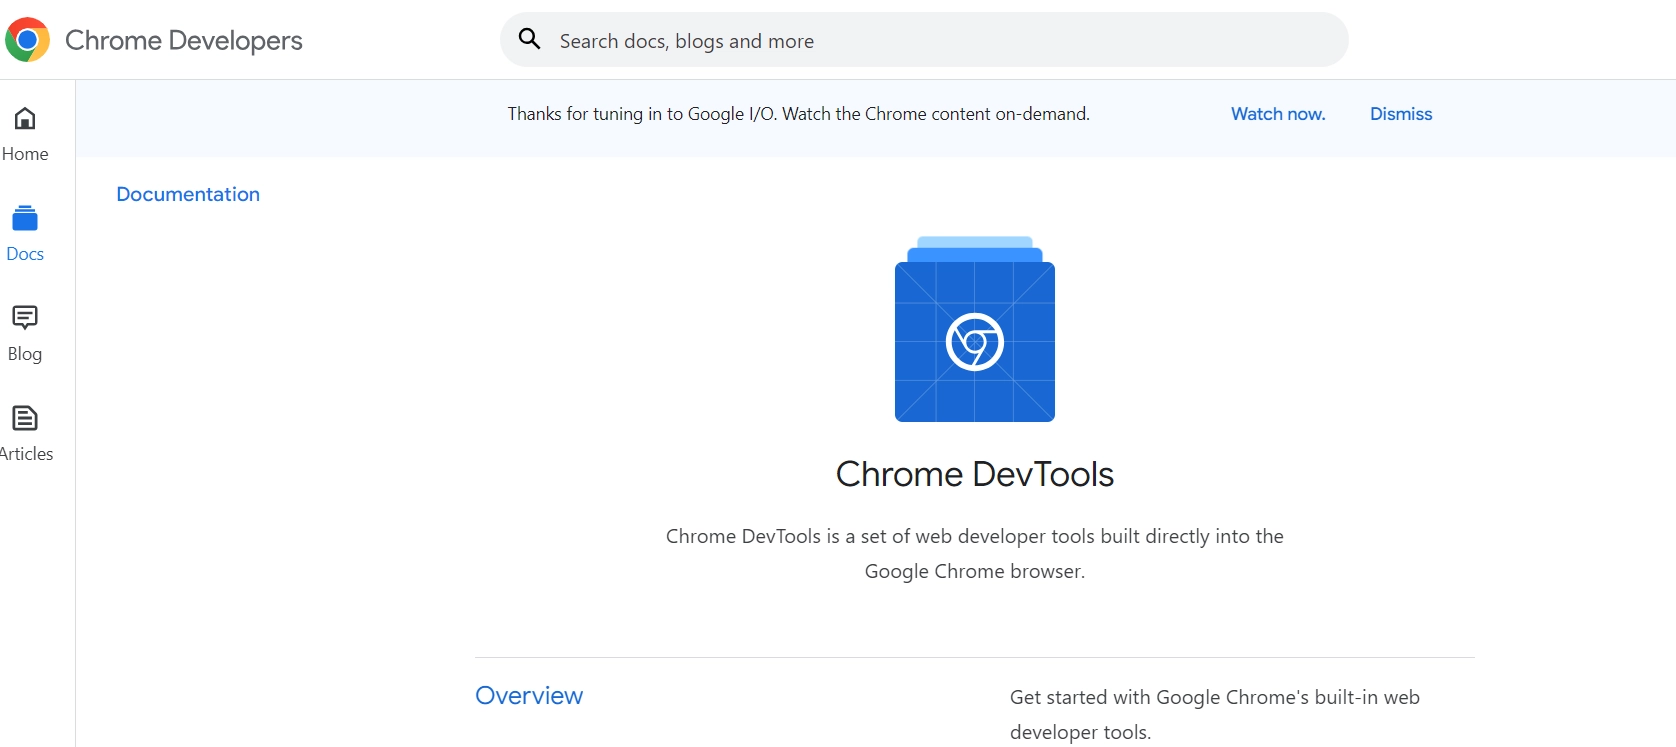 Chrome Developer Search Engine Optimization Tools